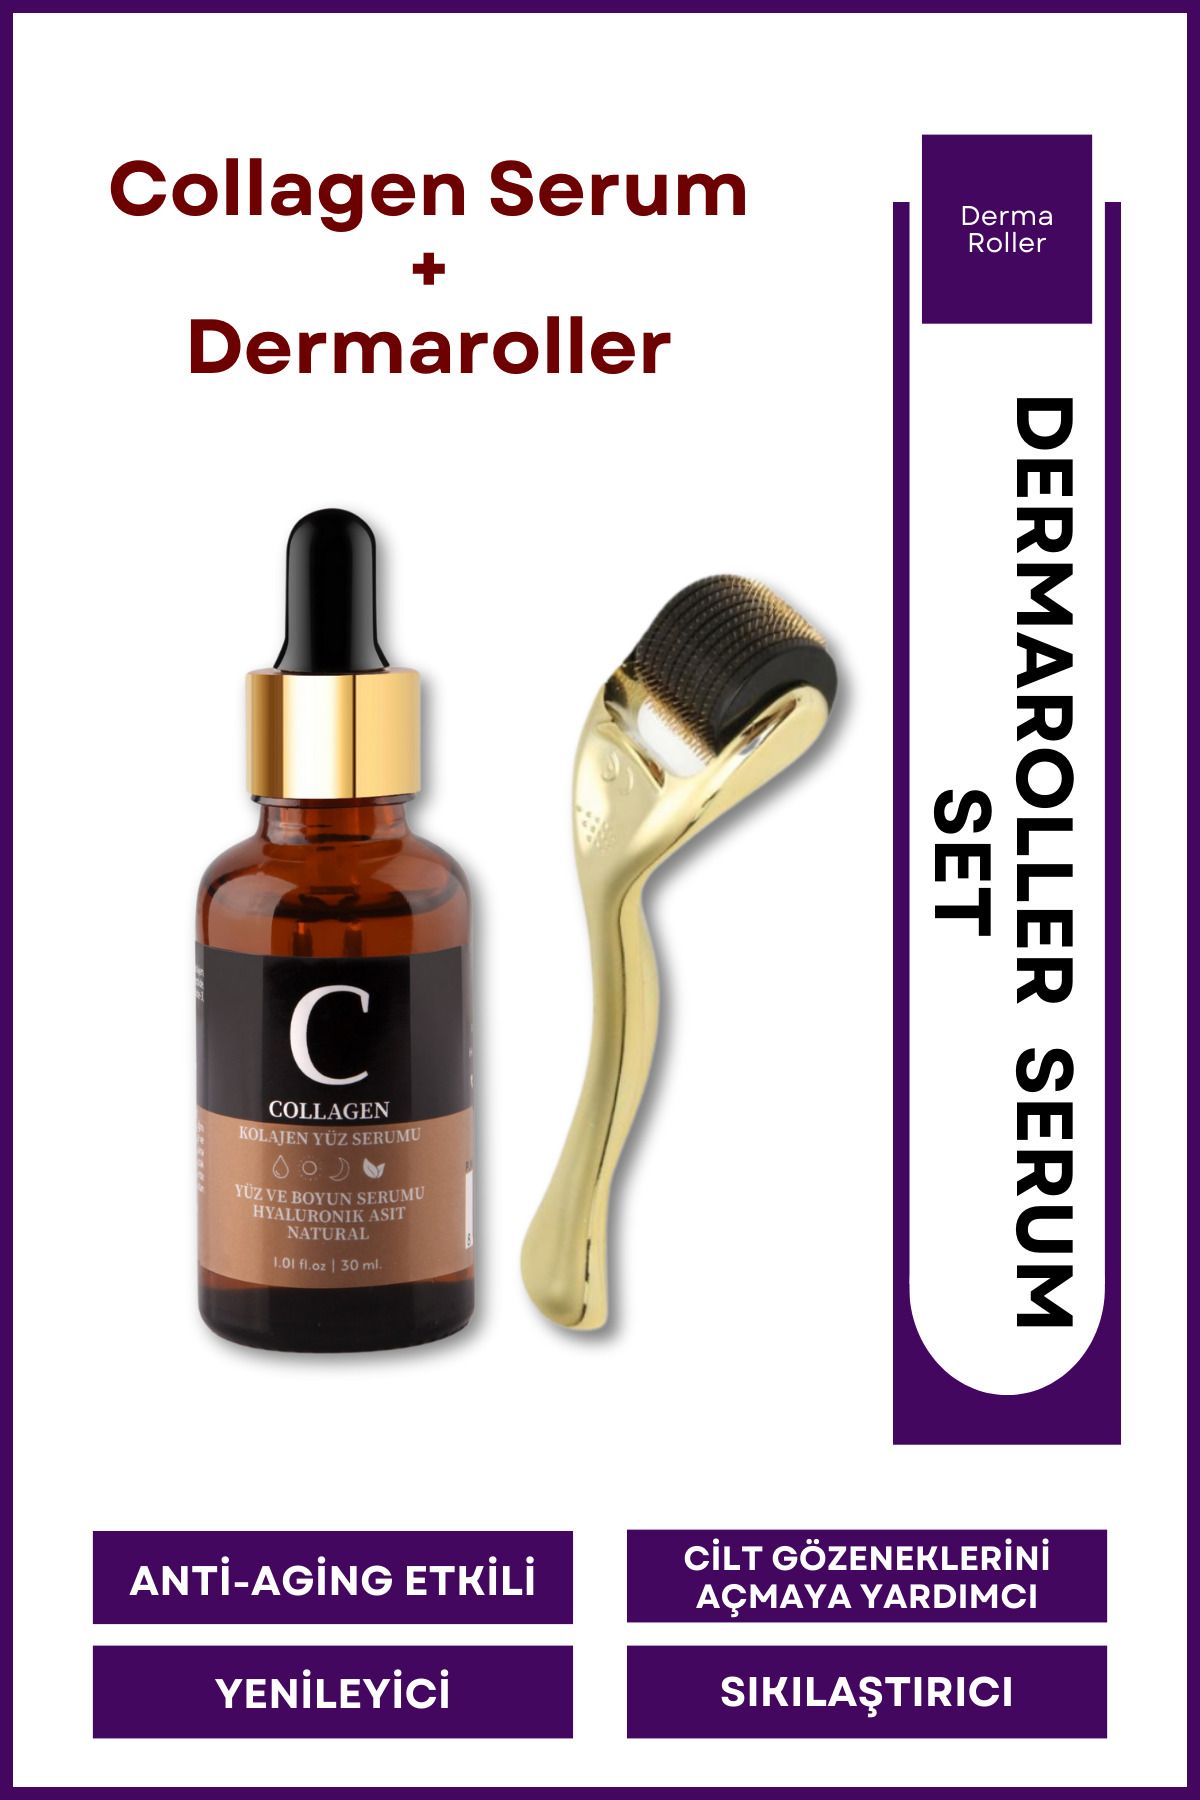 For You Gold Dermaroller (goldenroller) & Collagen Serum Yaşlanma Karşıtı Set